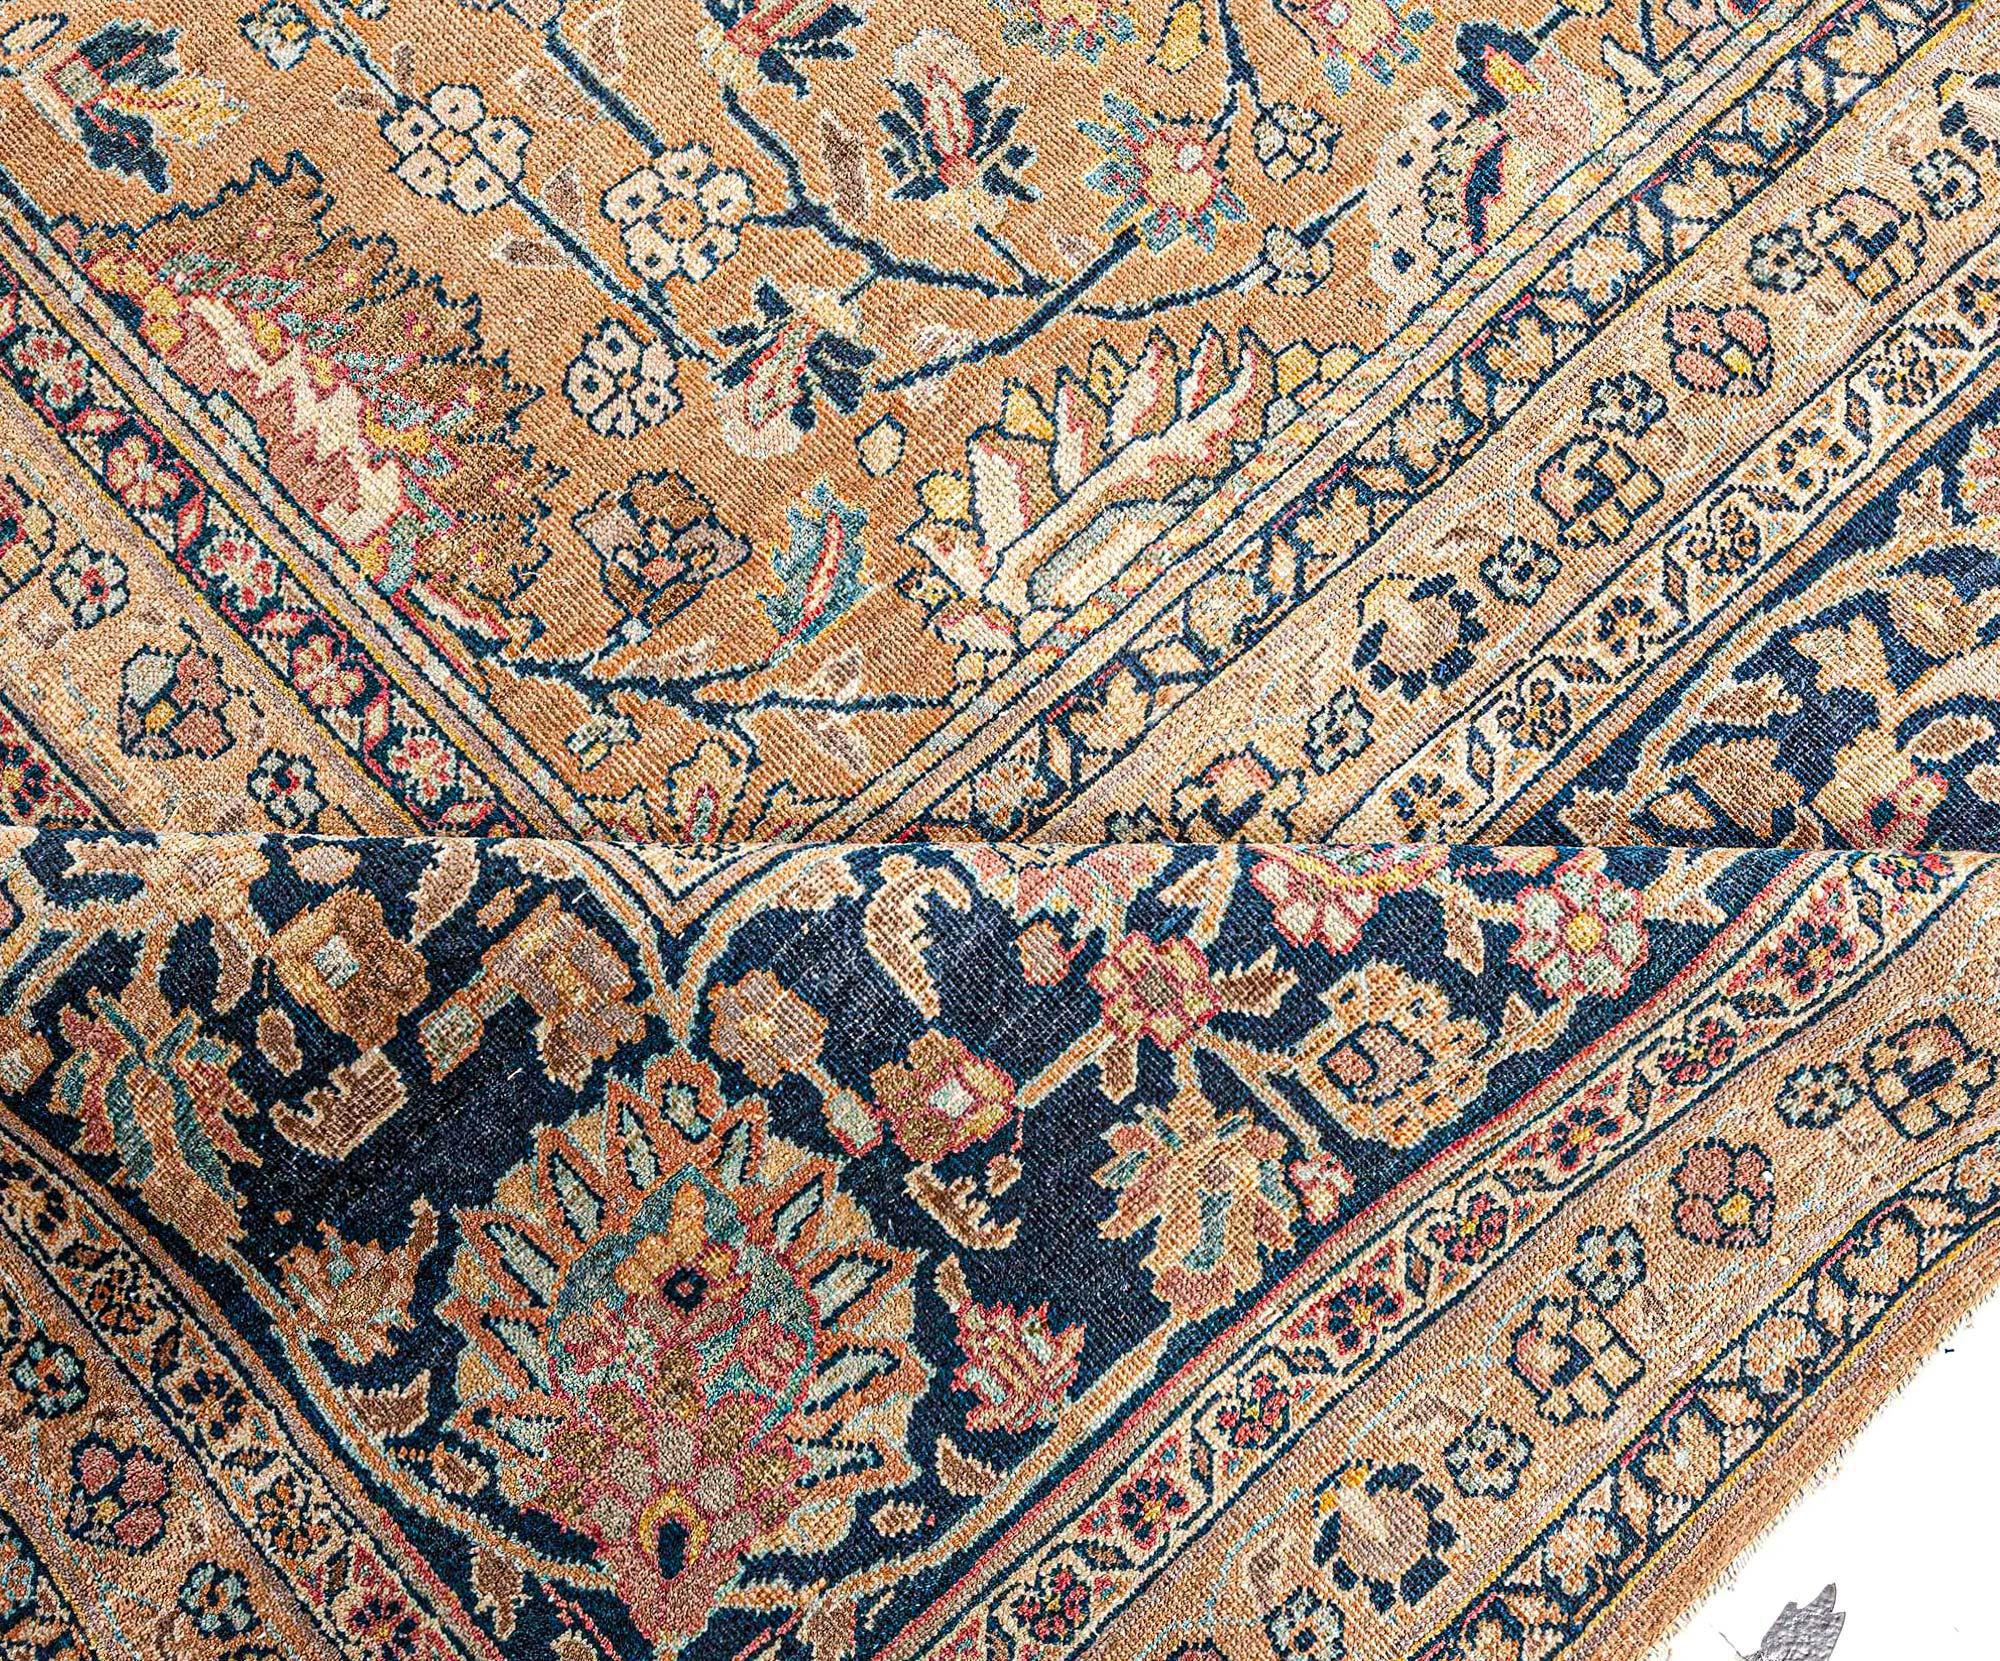 Vintage Persian Tabriz handmade wool rug
Size: 11'8